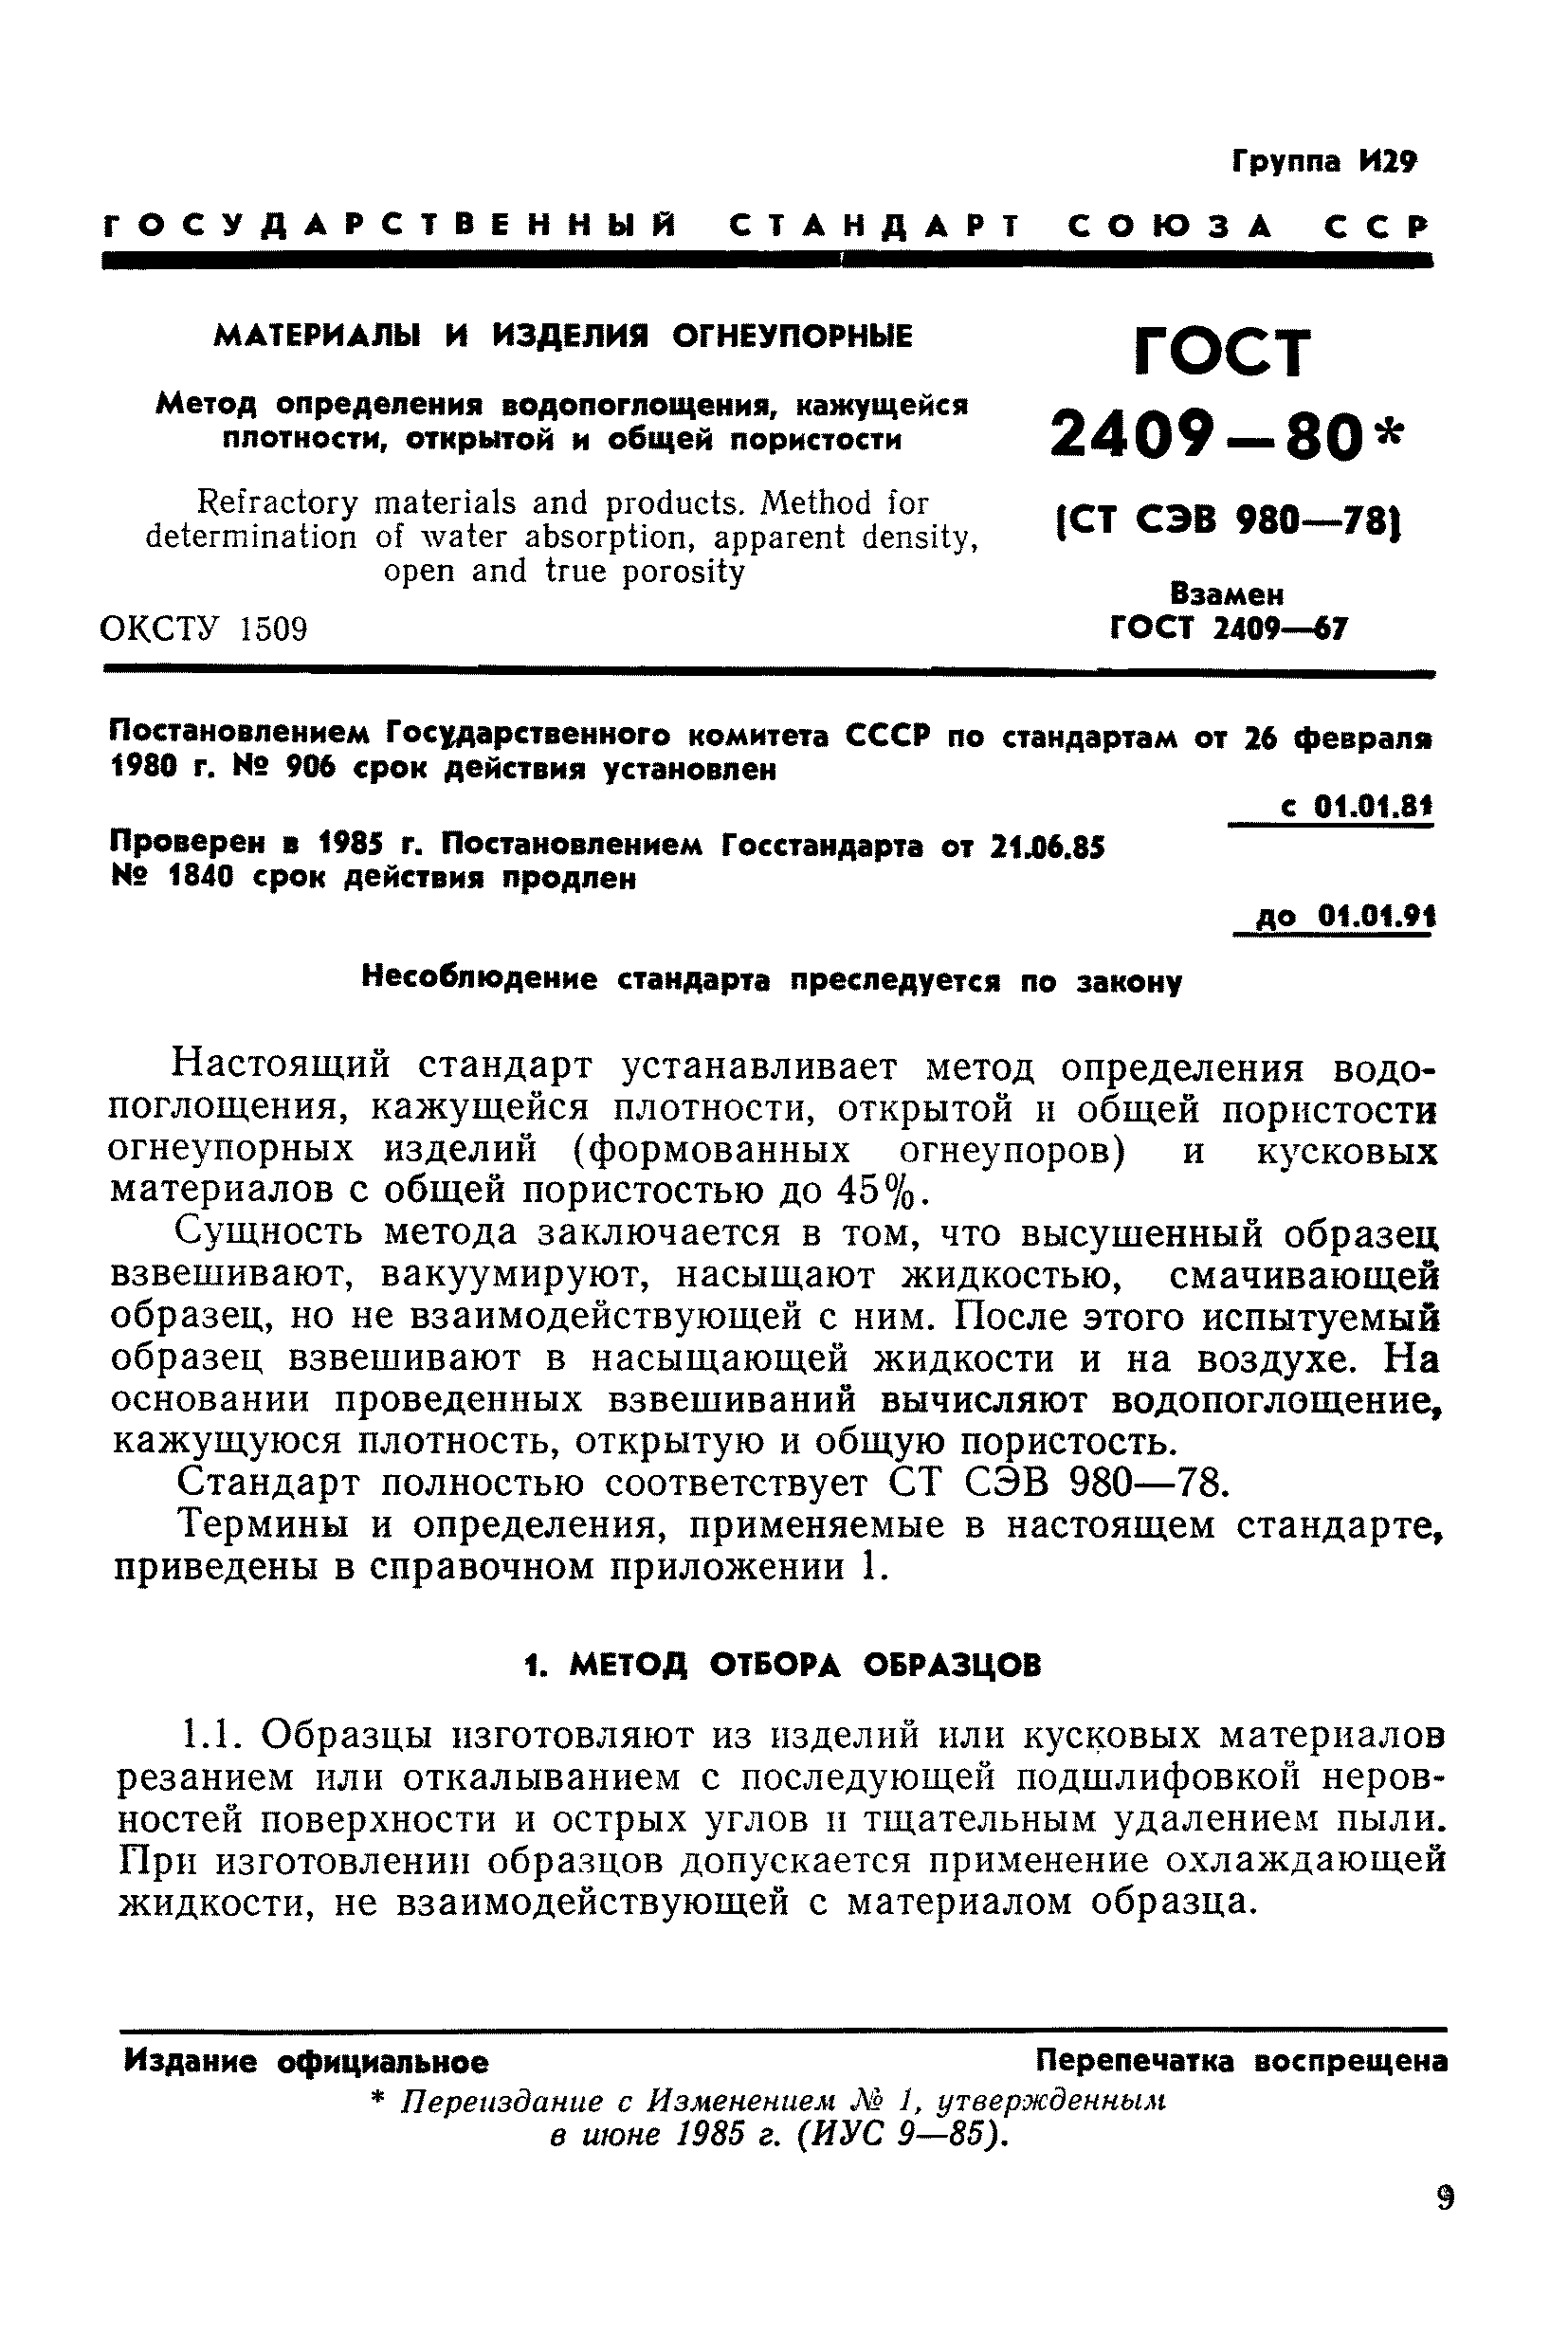 ГОСТ 2409-80